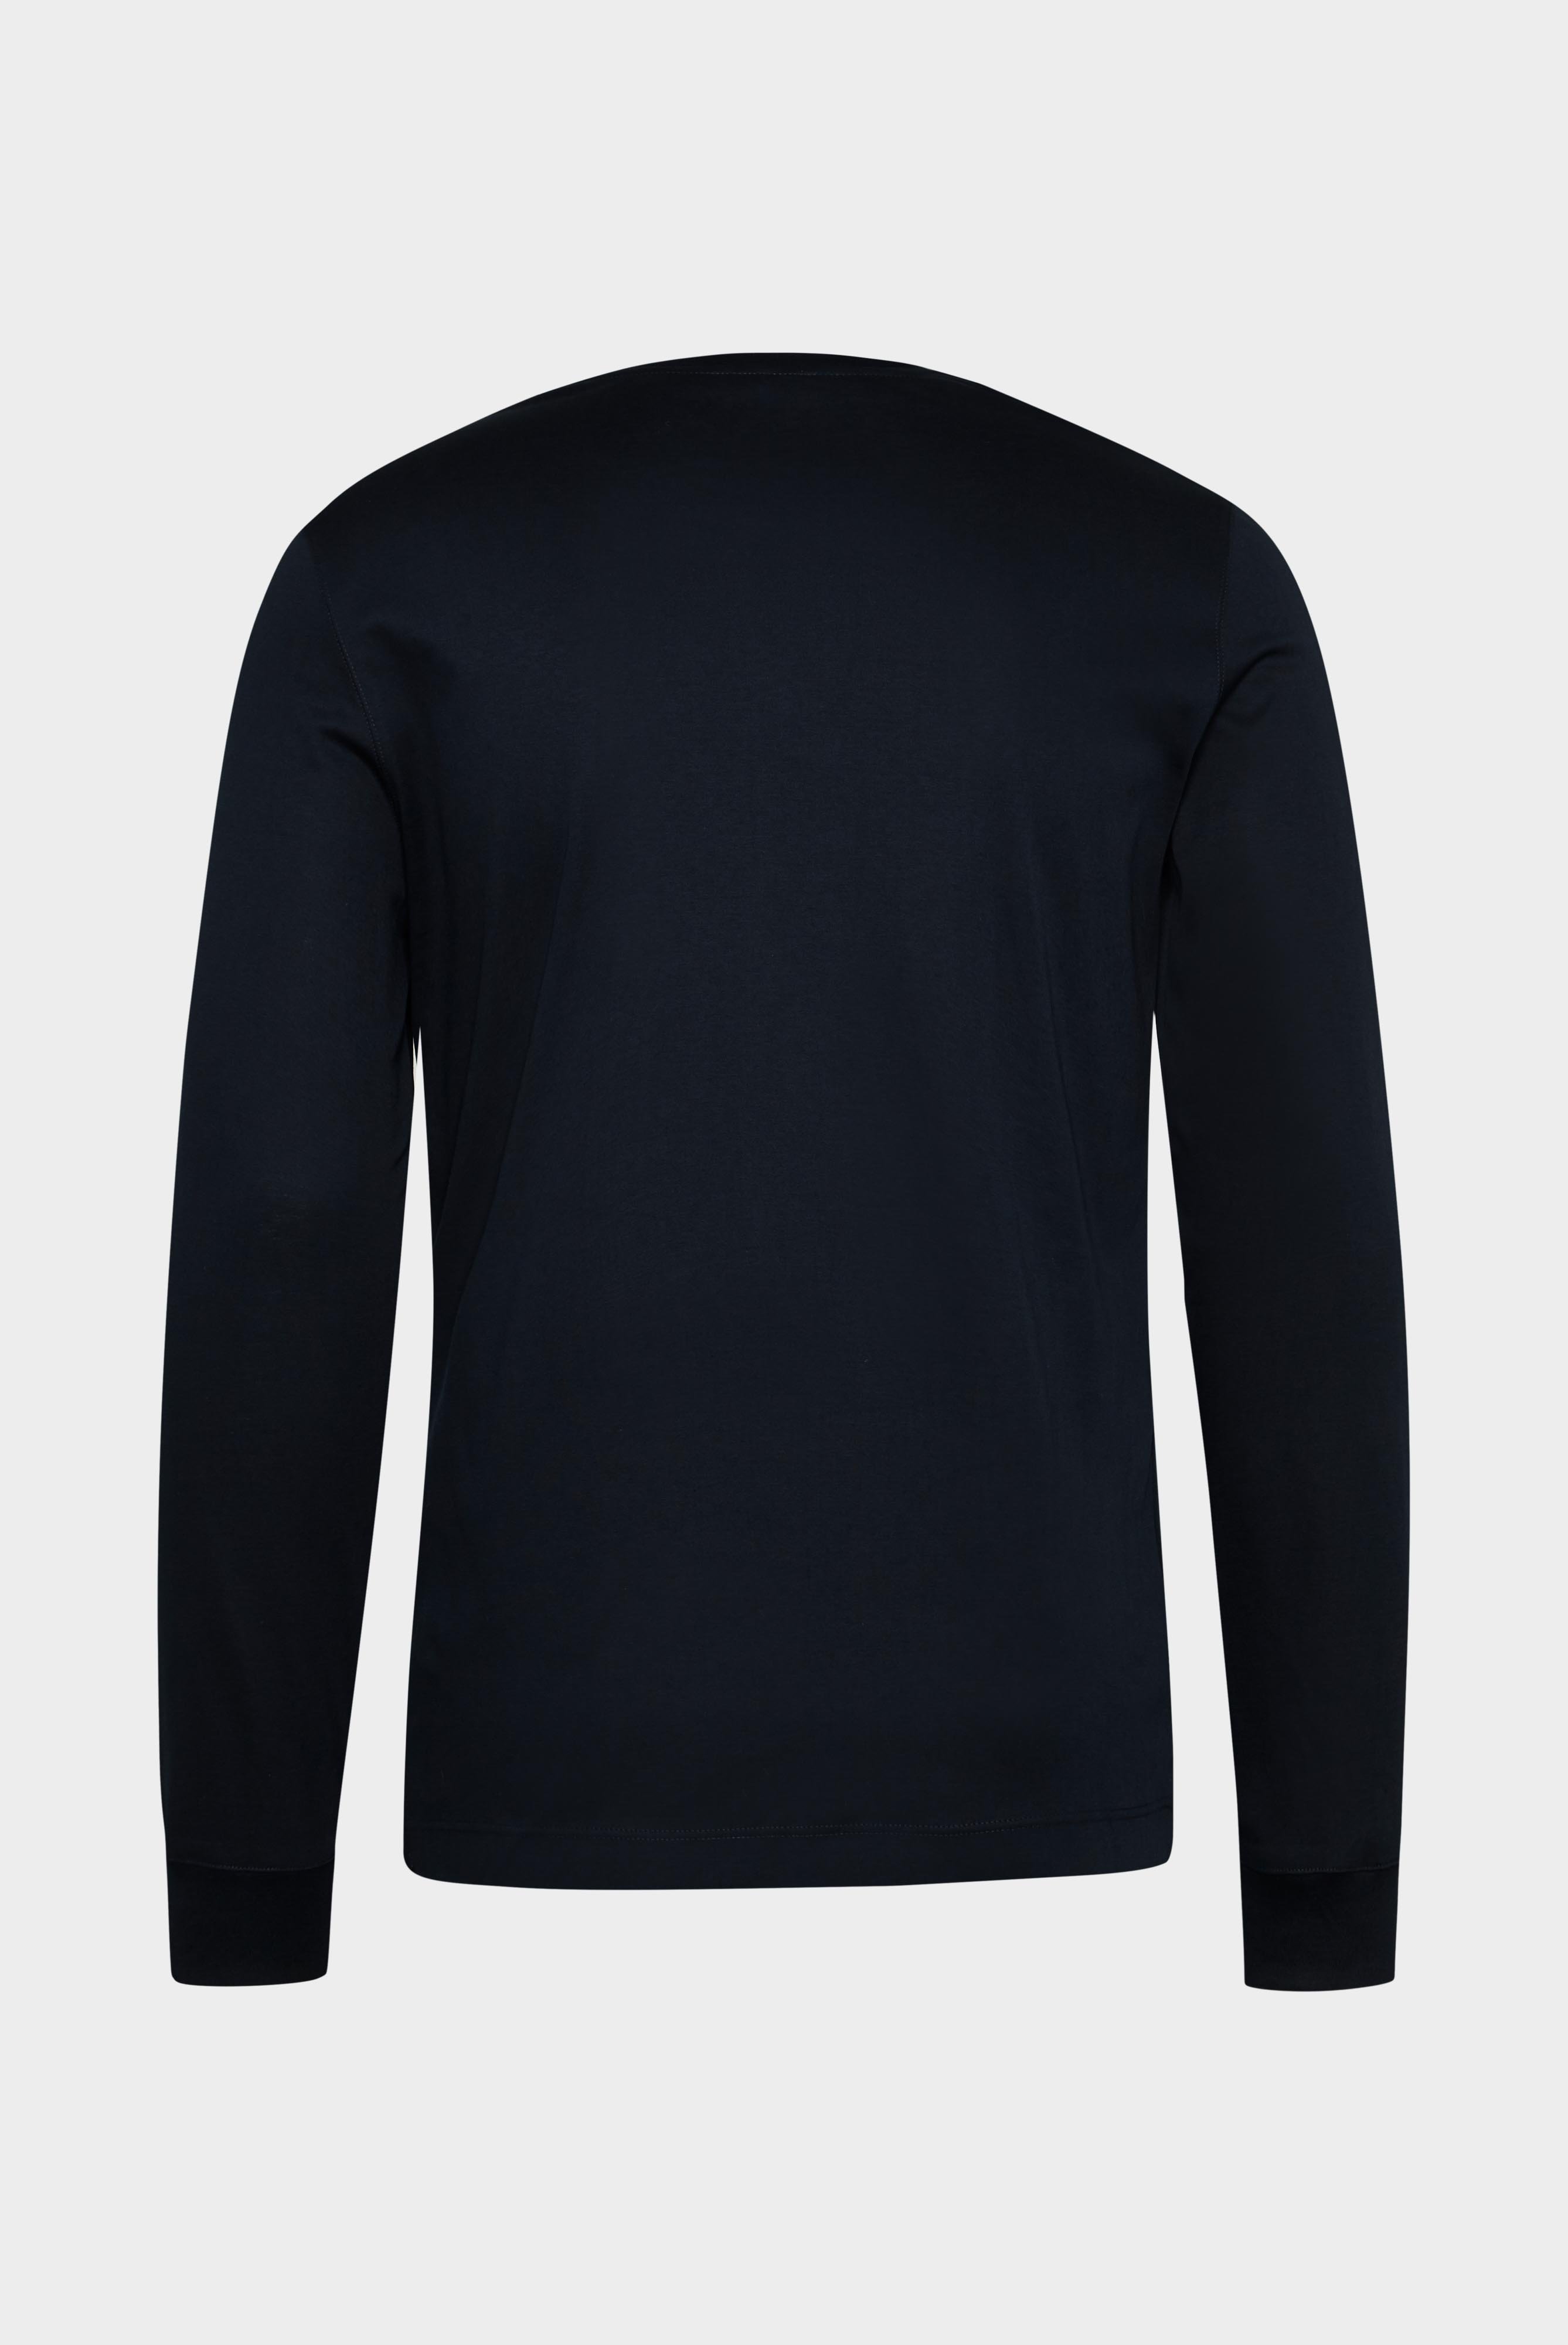 T-Shirts+Langarm Jersey T-Shirt mit Rundhals Slim Fit+20.1718.UX.180031.790.L